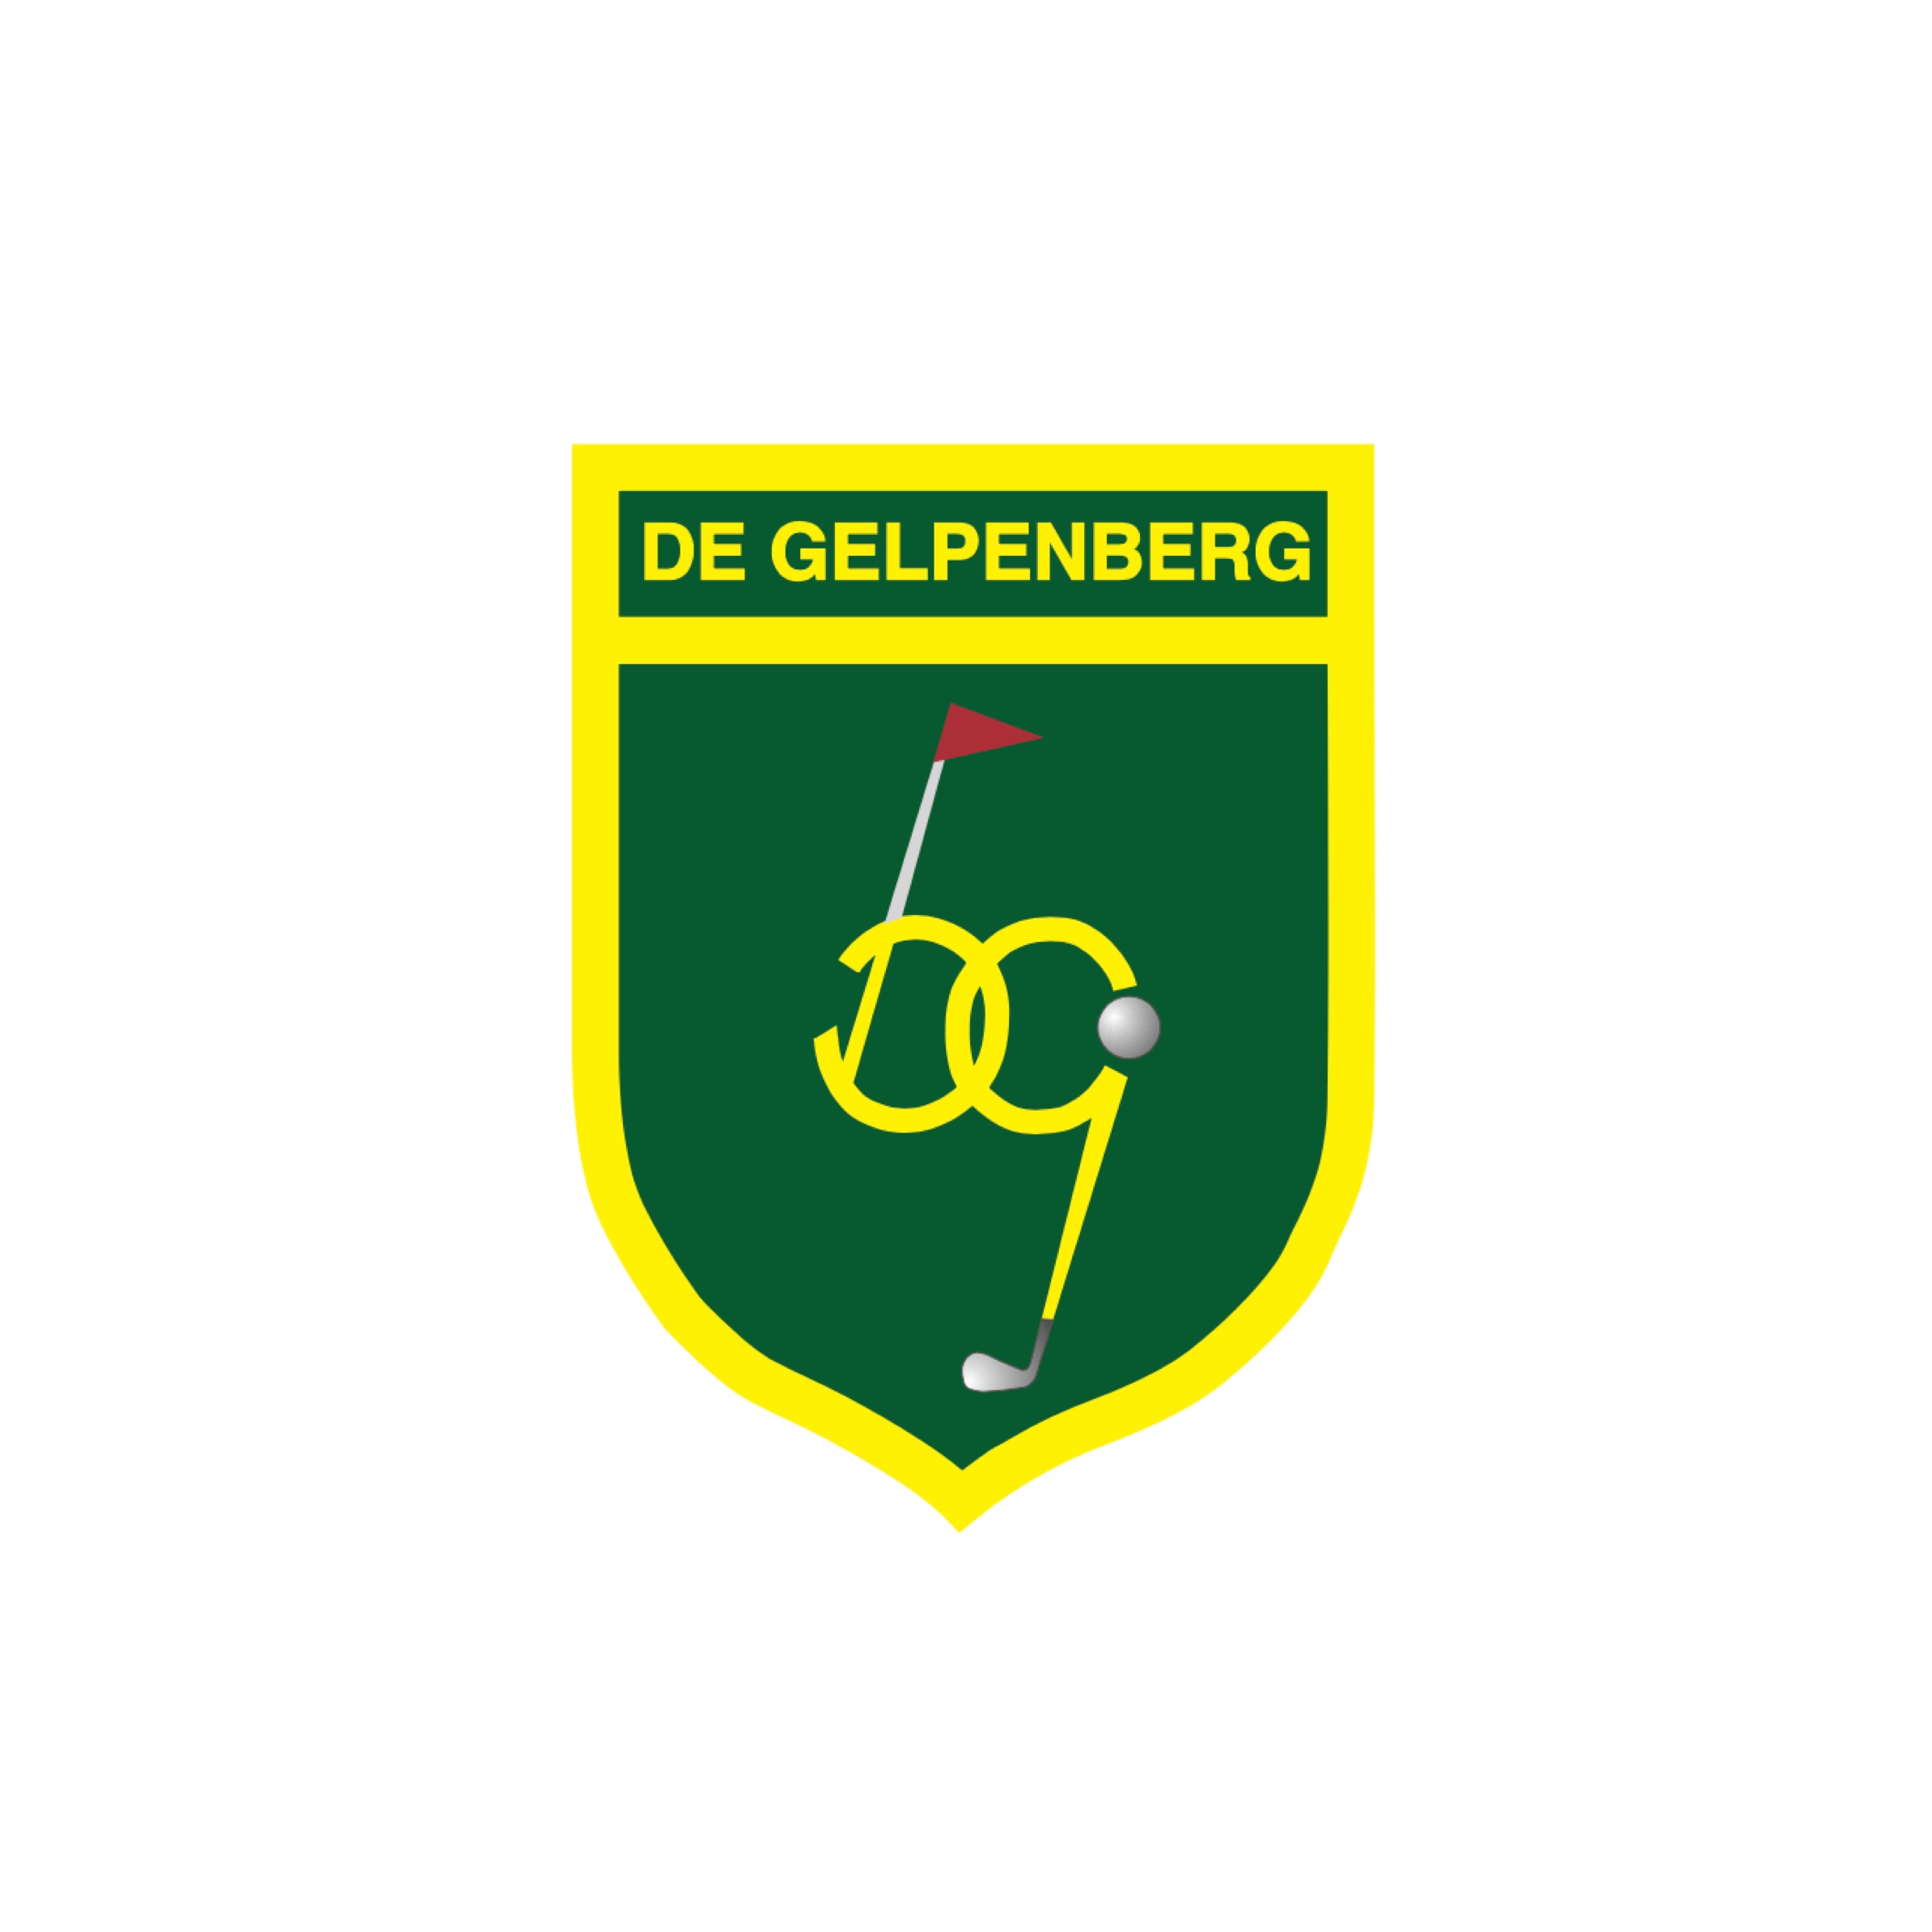 25. Gelpenberg/NL (Drentse Golfclub De Gelpenberg)